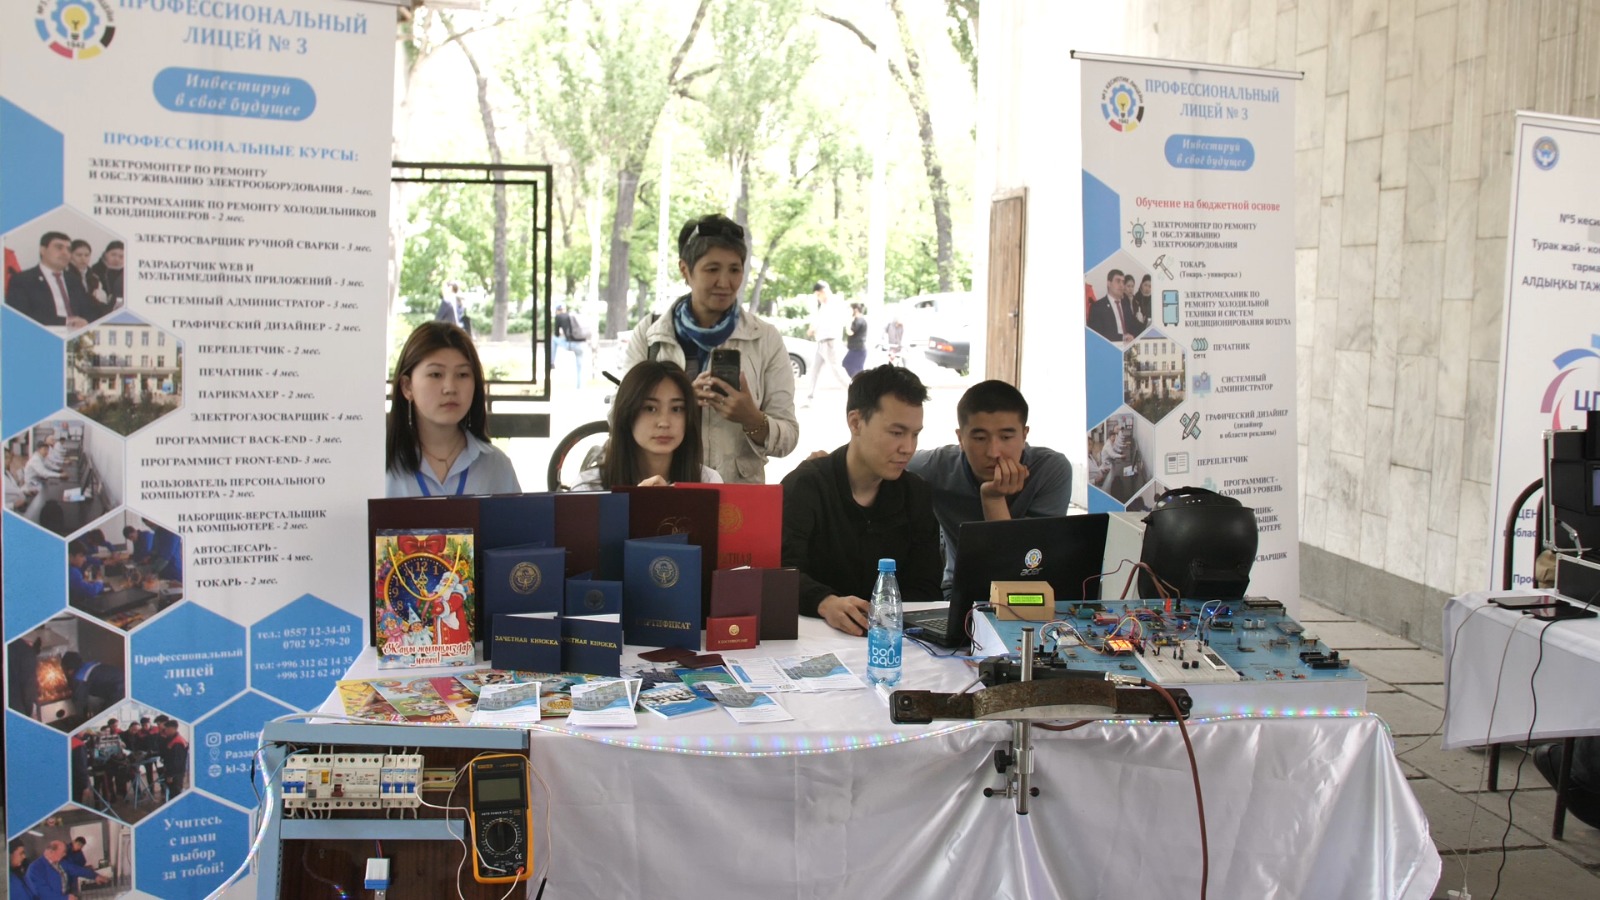 a8f36e95 a5a3 4224 b94e ef324993b37b Более 70 ведущих компаний приняли участие в ярмарке вакансий в Бишкеке